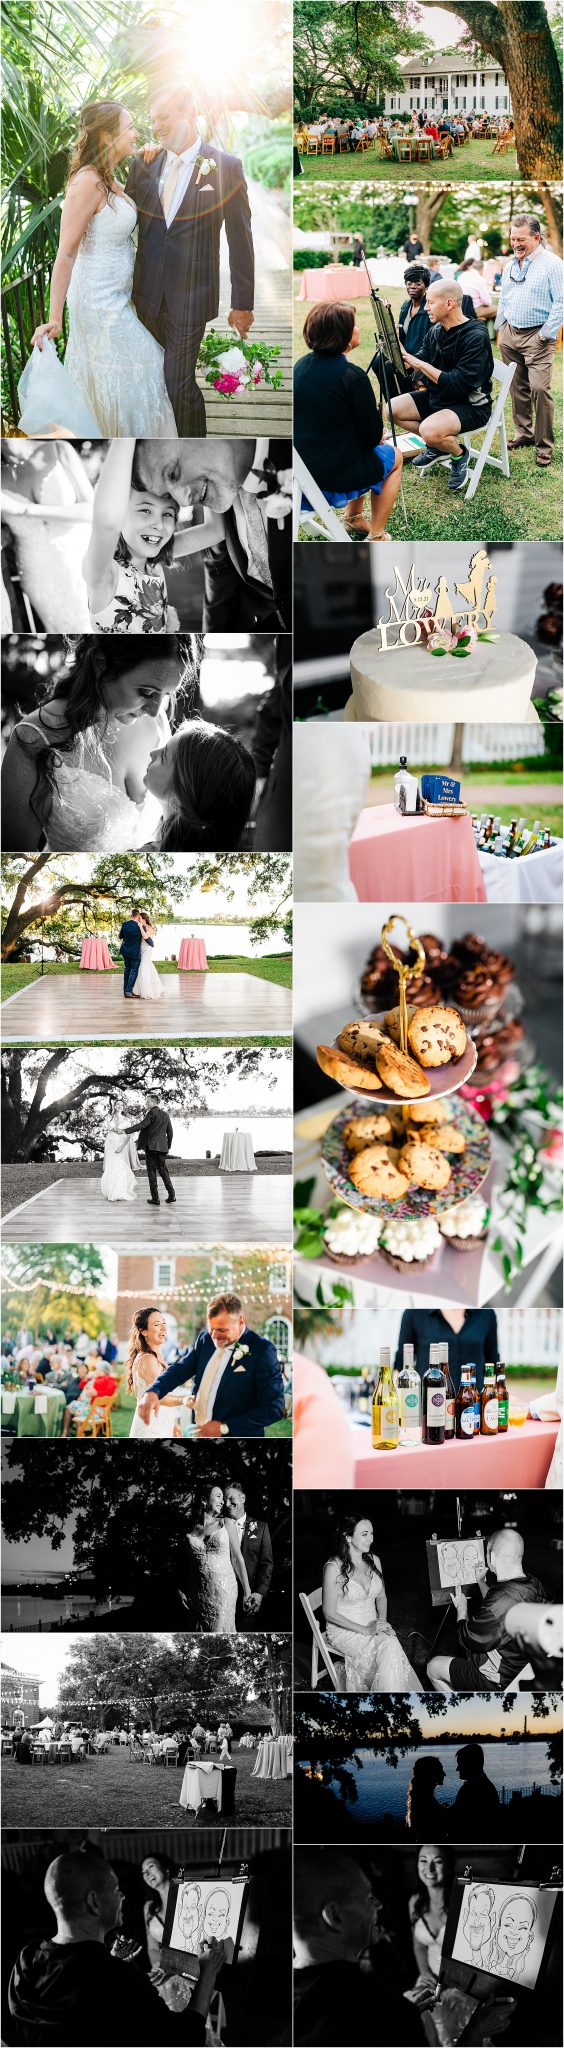 Kaminski House, Cory Lee Photography, Georgetown Wedding 